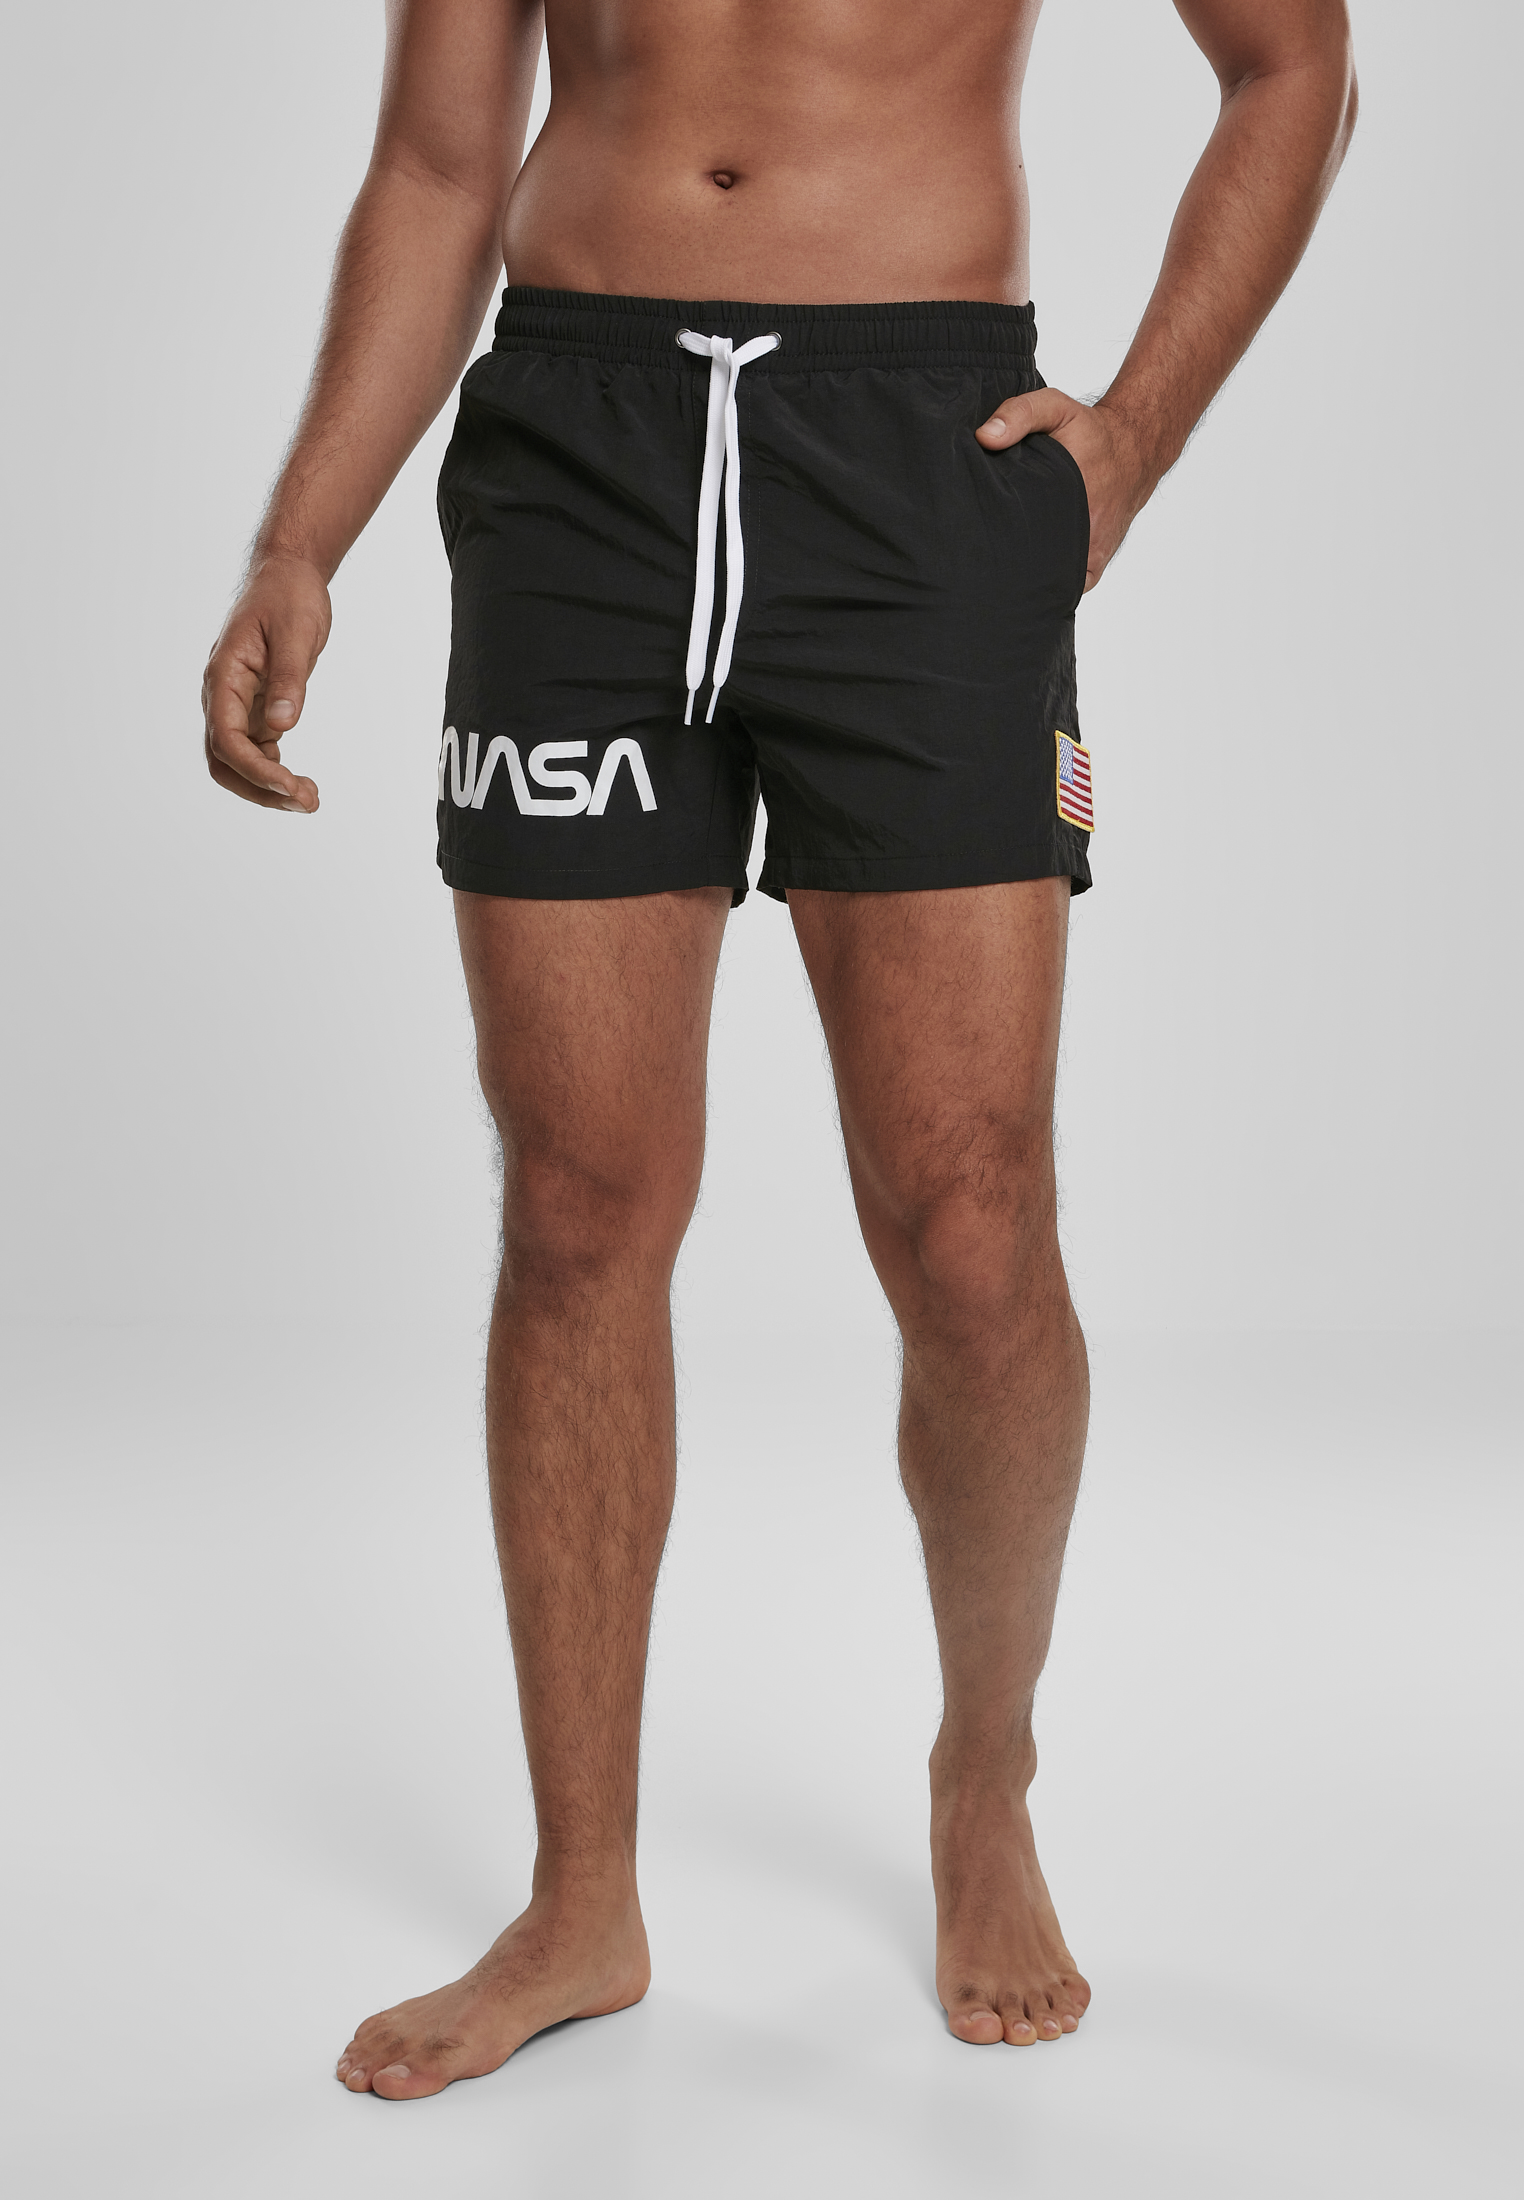 Black swimsuit with NASA Worm logo